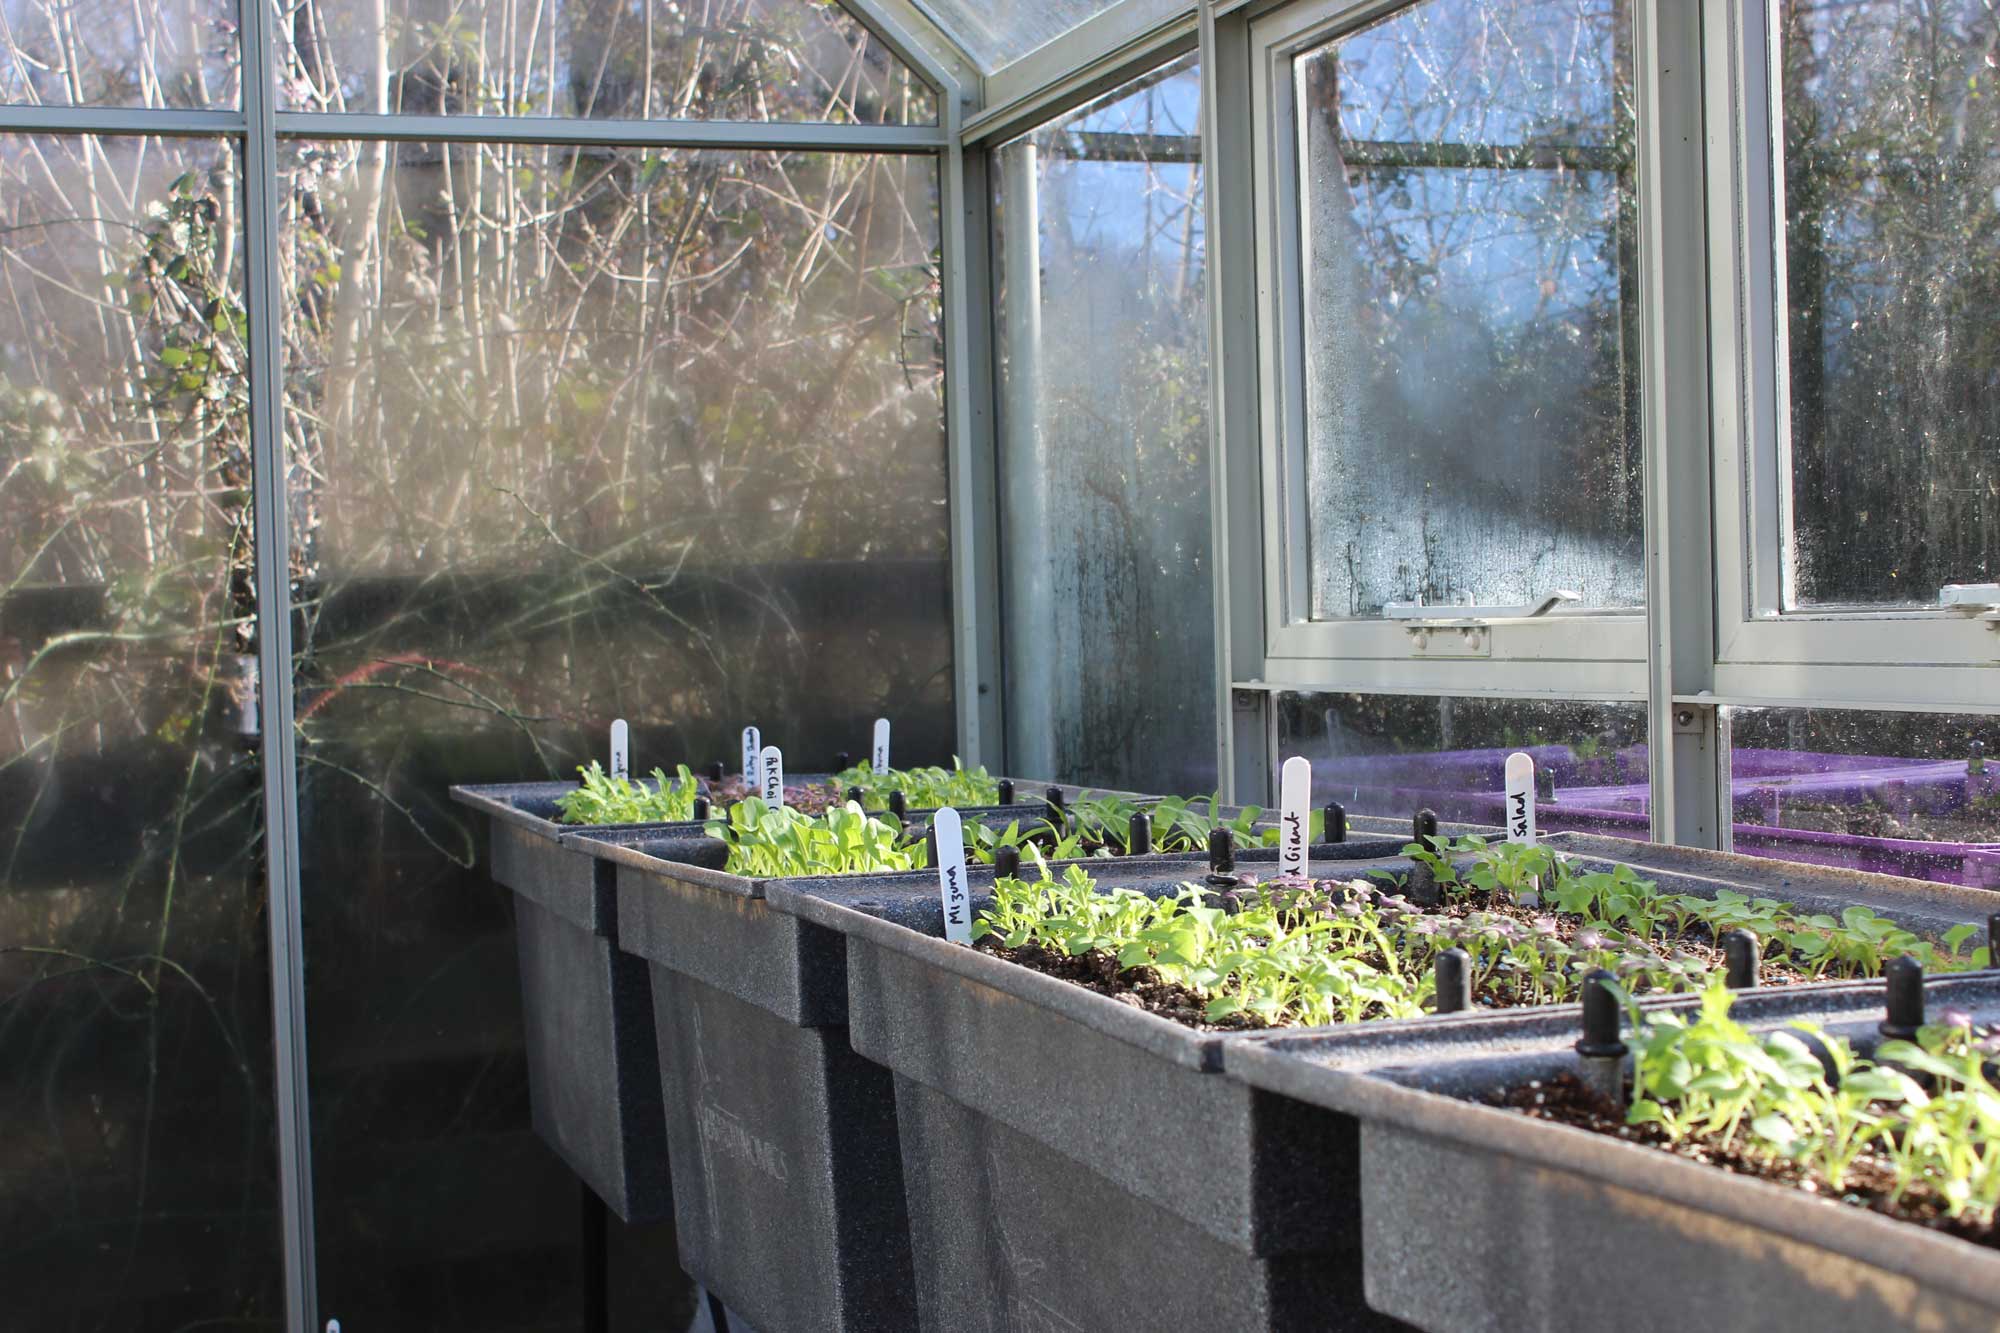 Seedlings in a greenhouse